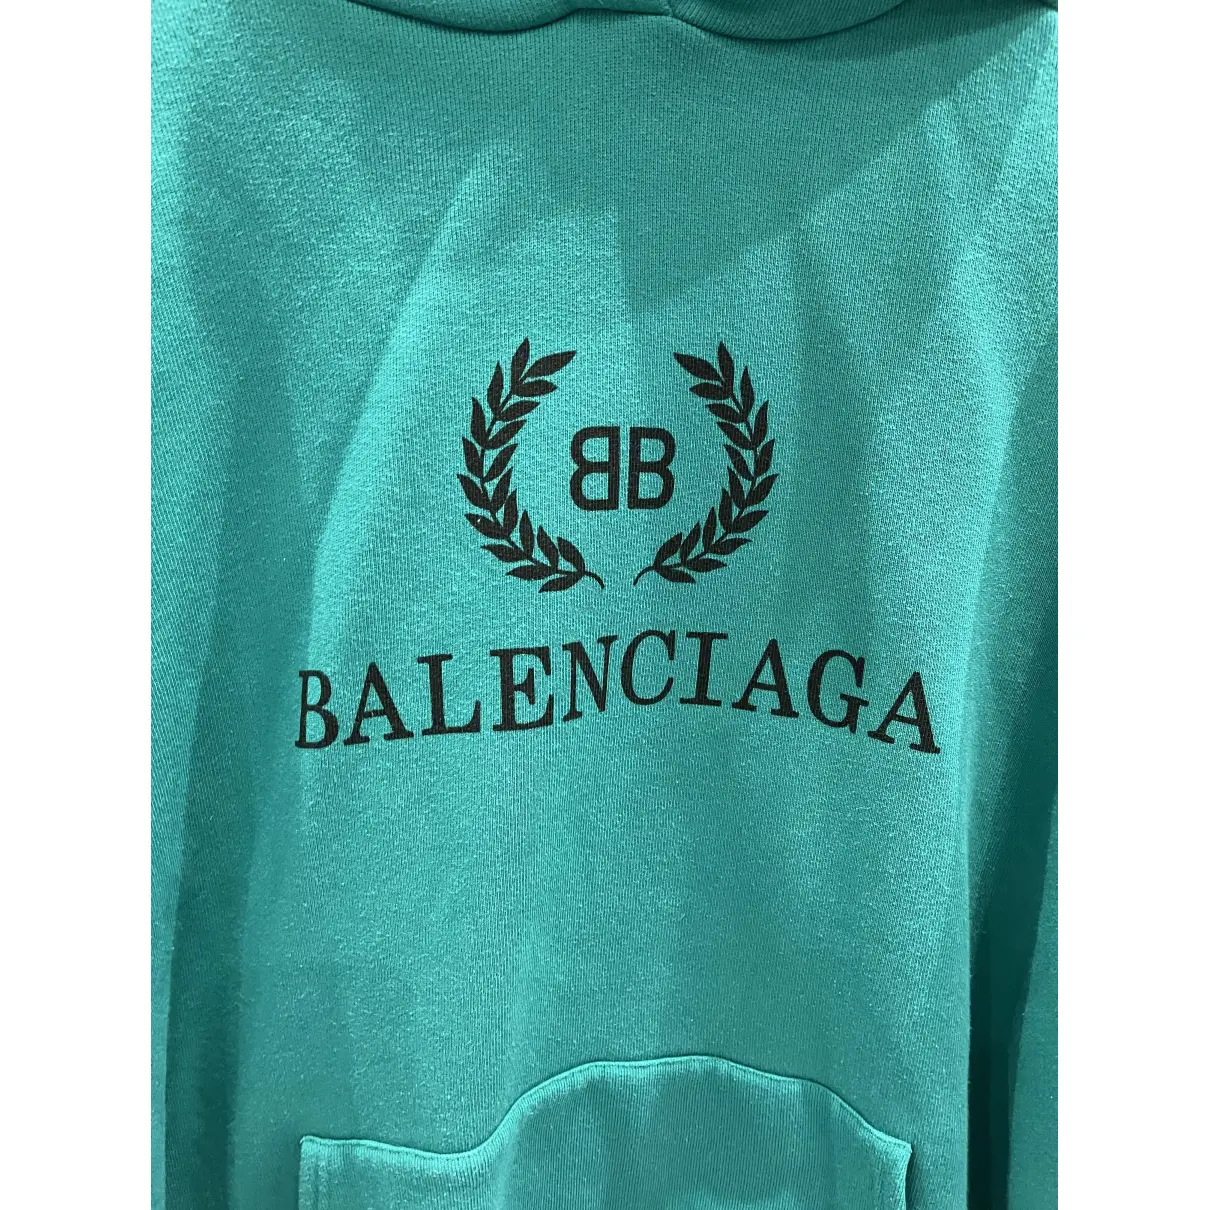 Buy Balenciaga Green Cotton Knitwear & Sweatshirt online